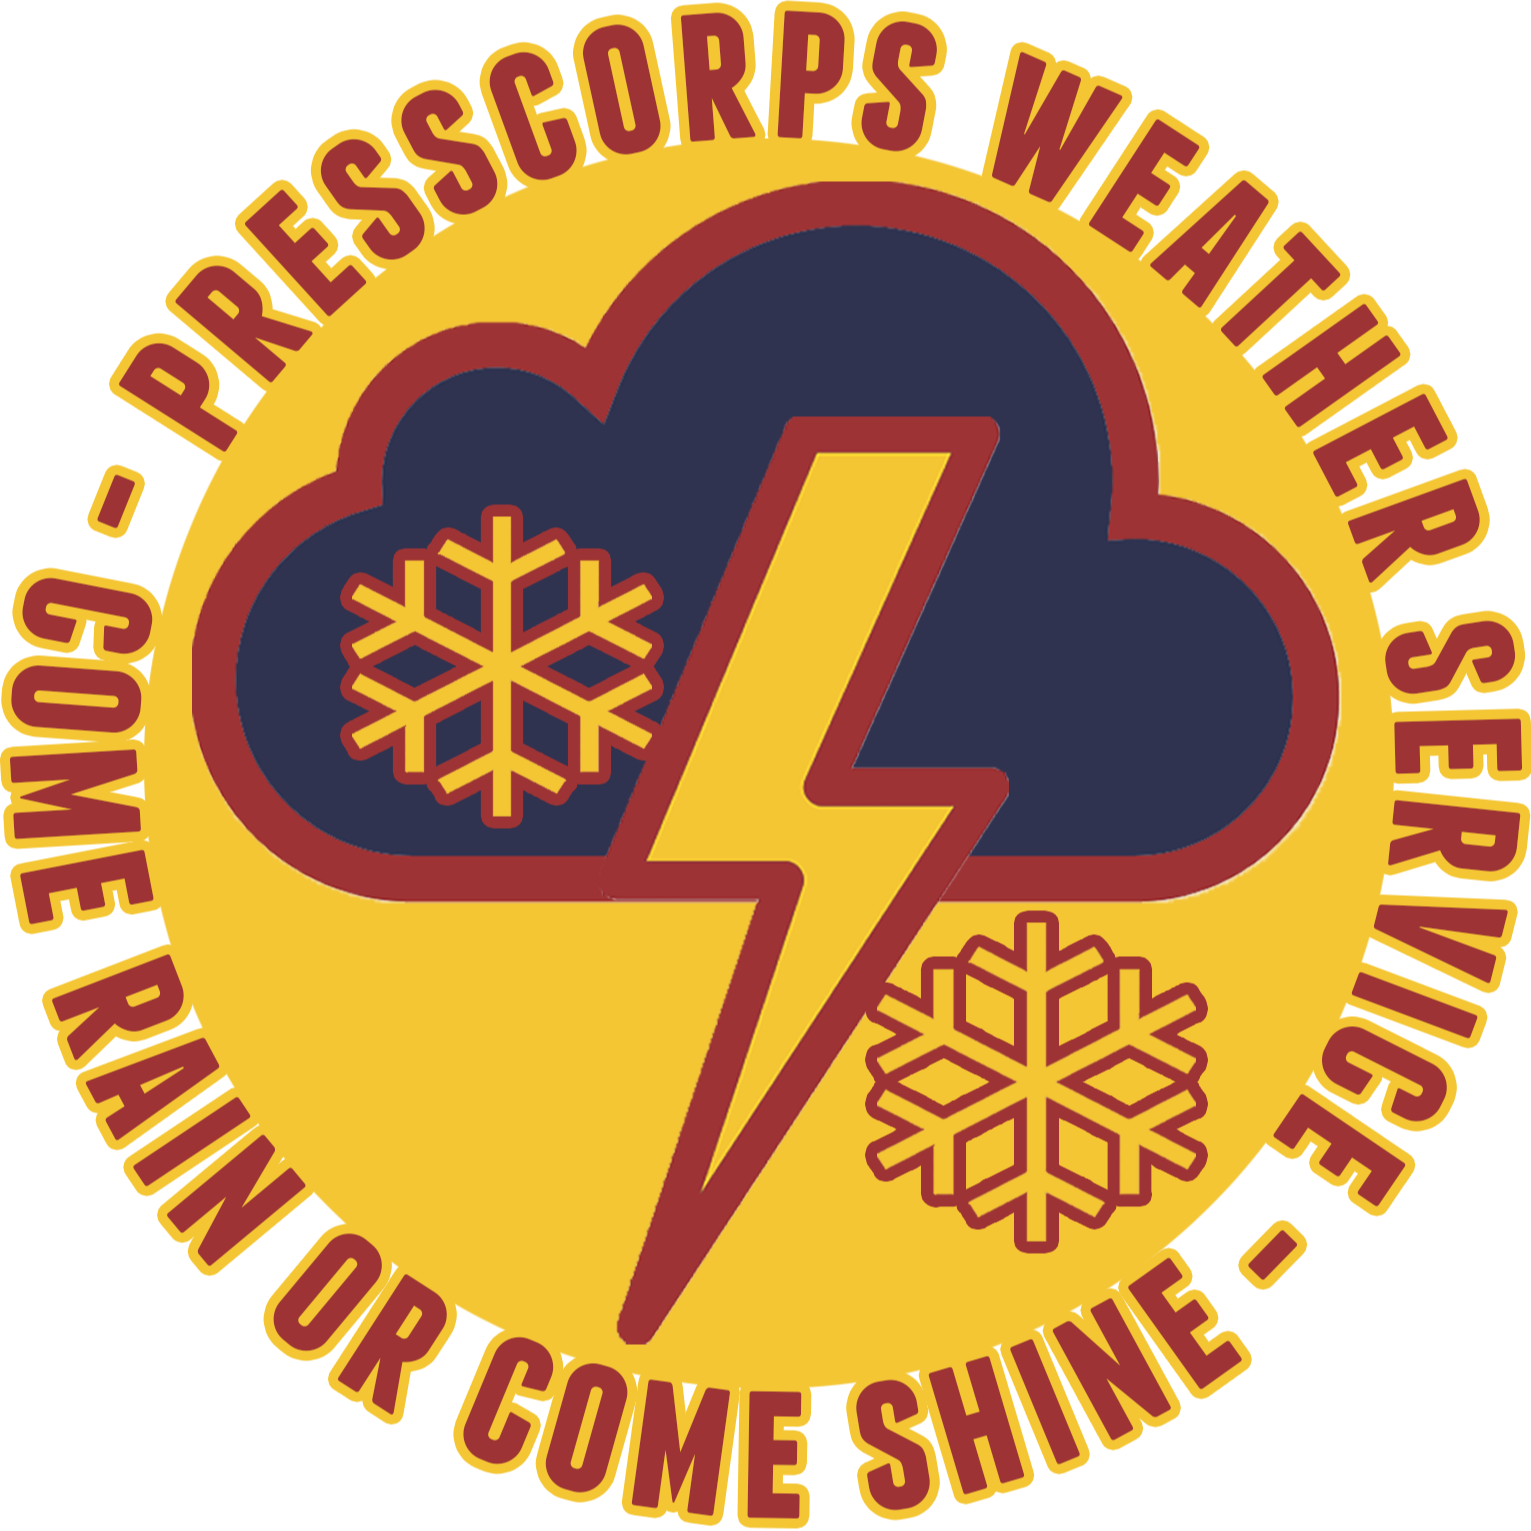 PressCorps Weather Service